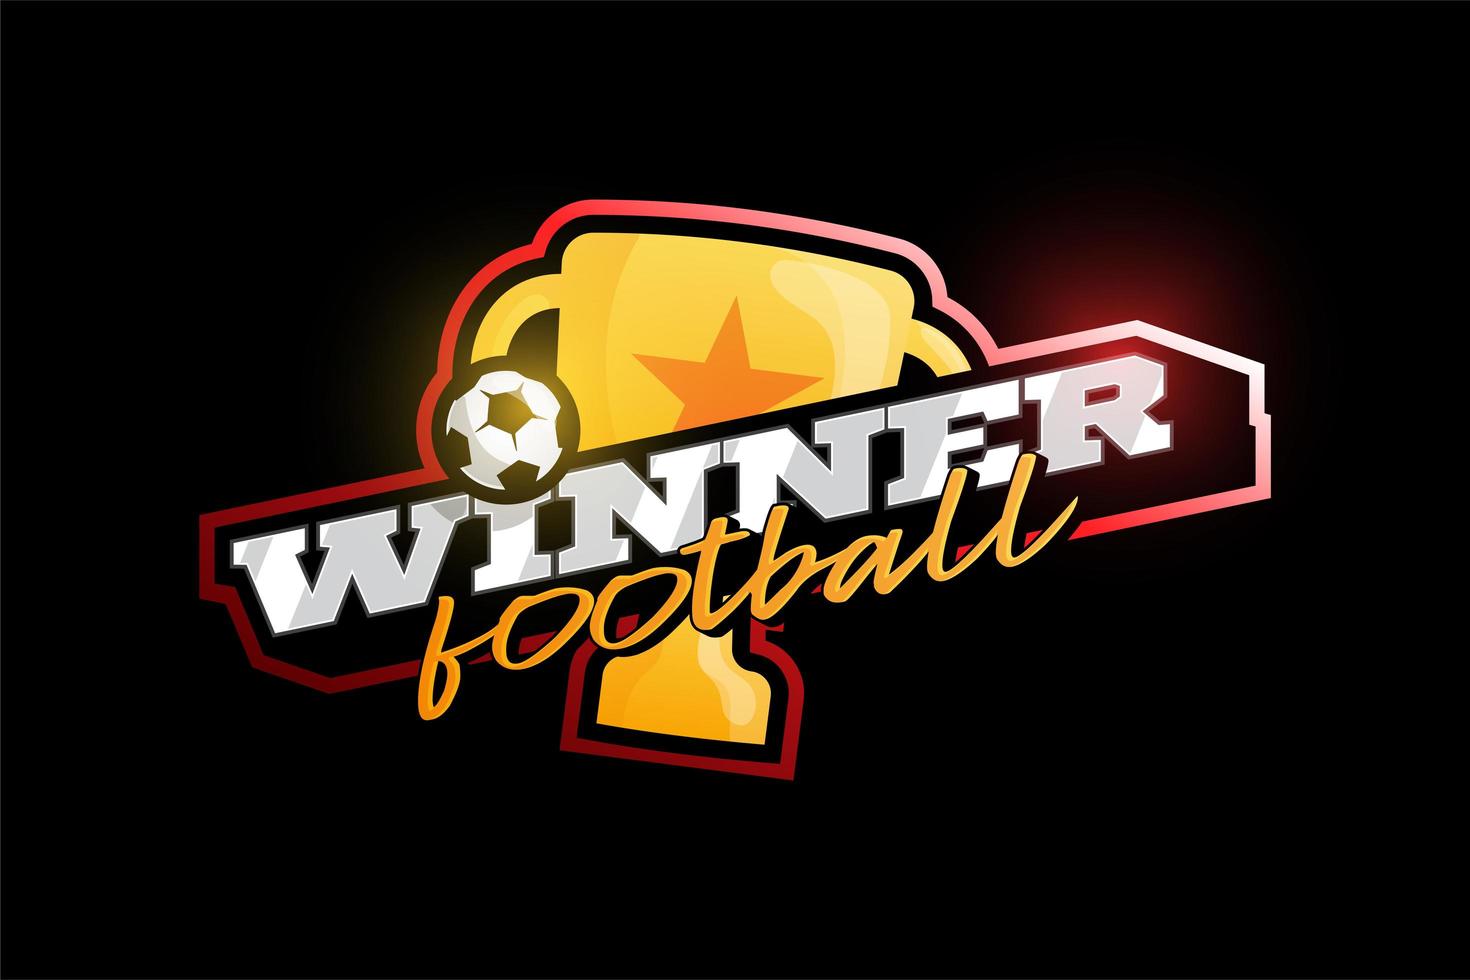 Gewinner 2020 Fußball Vektor Logo